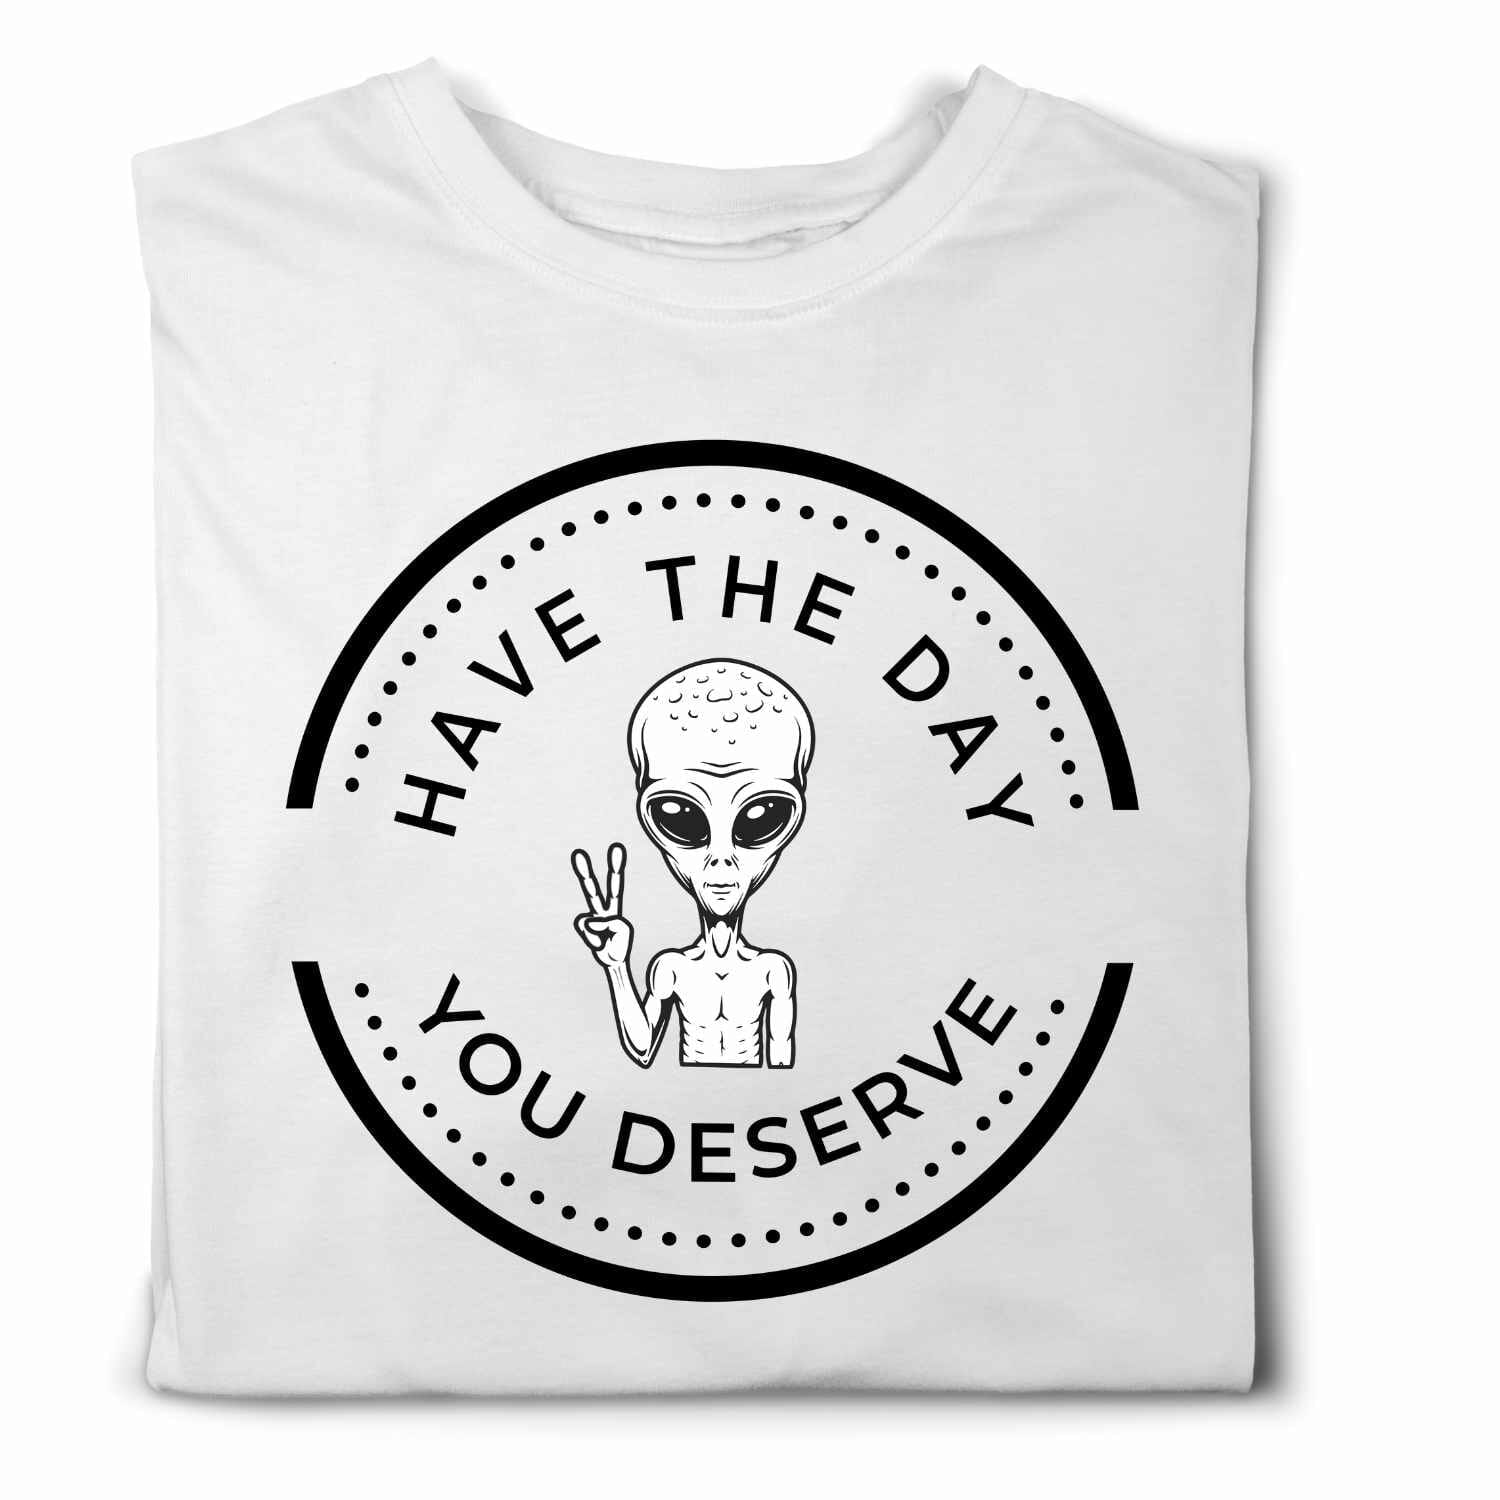 Have the Day you Deserve Alien T-shirt Design